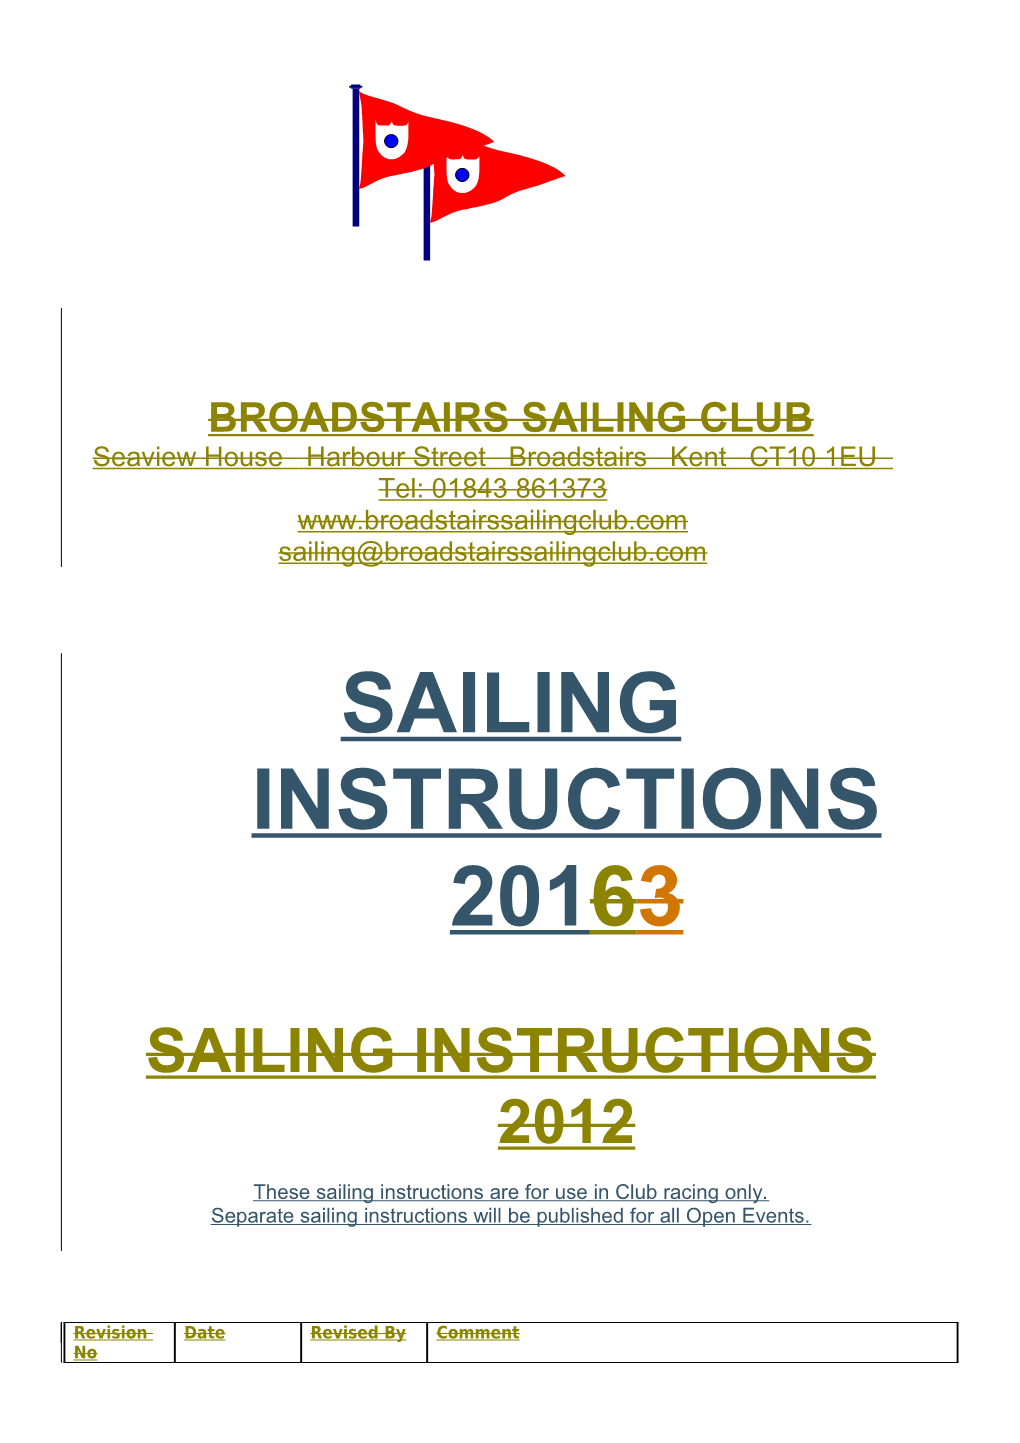 Broadstairs Sailing Club